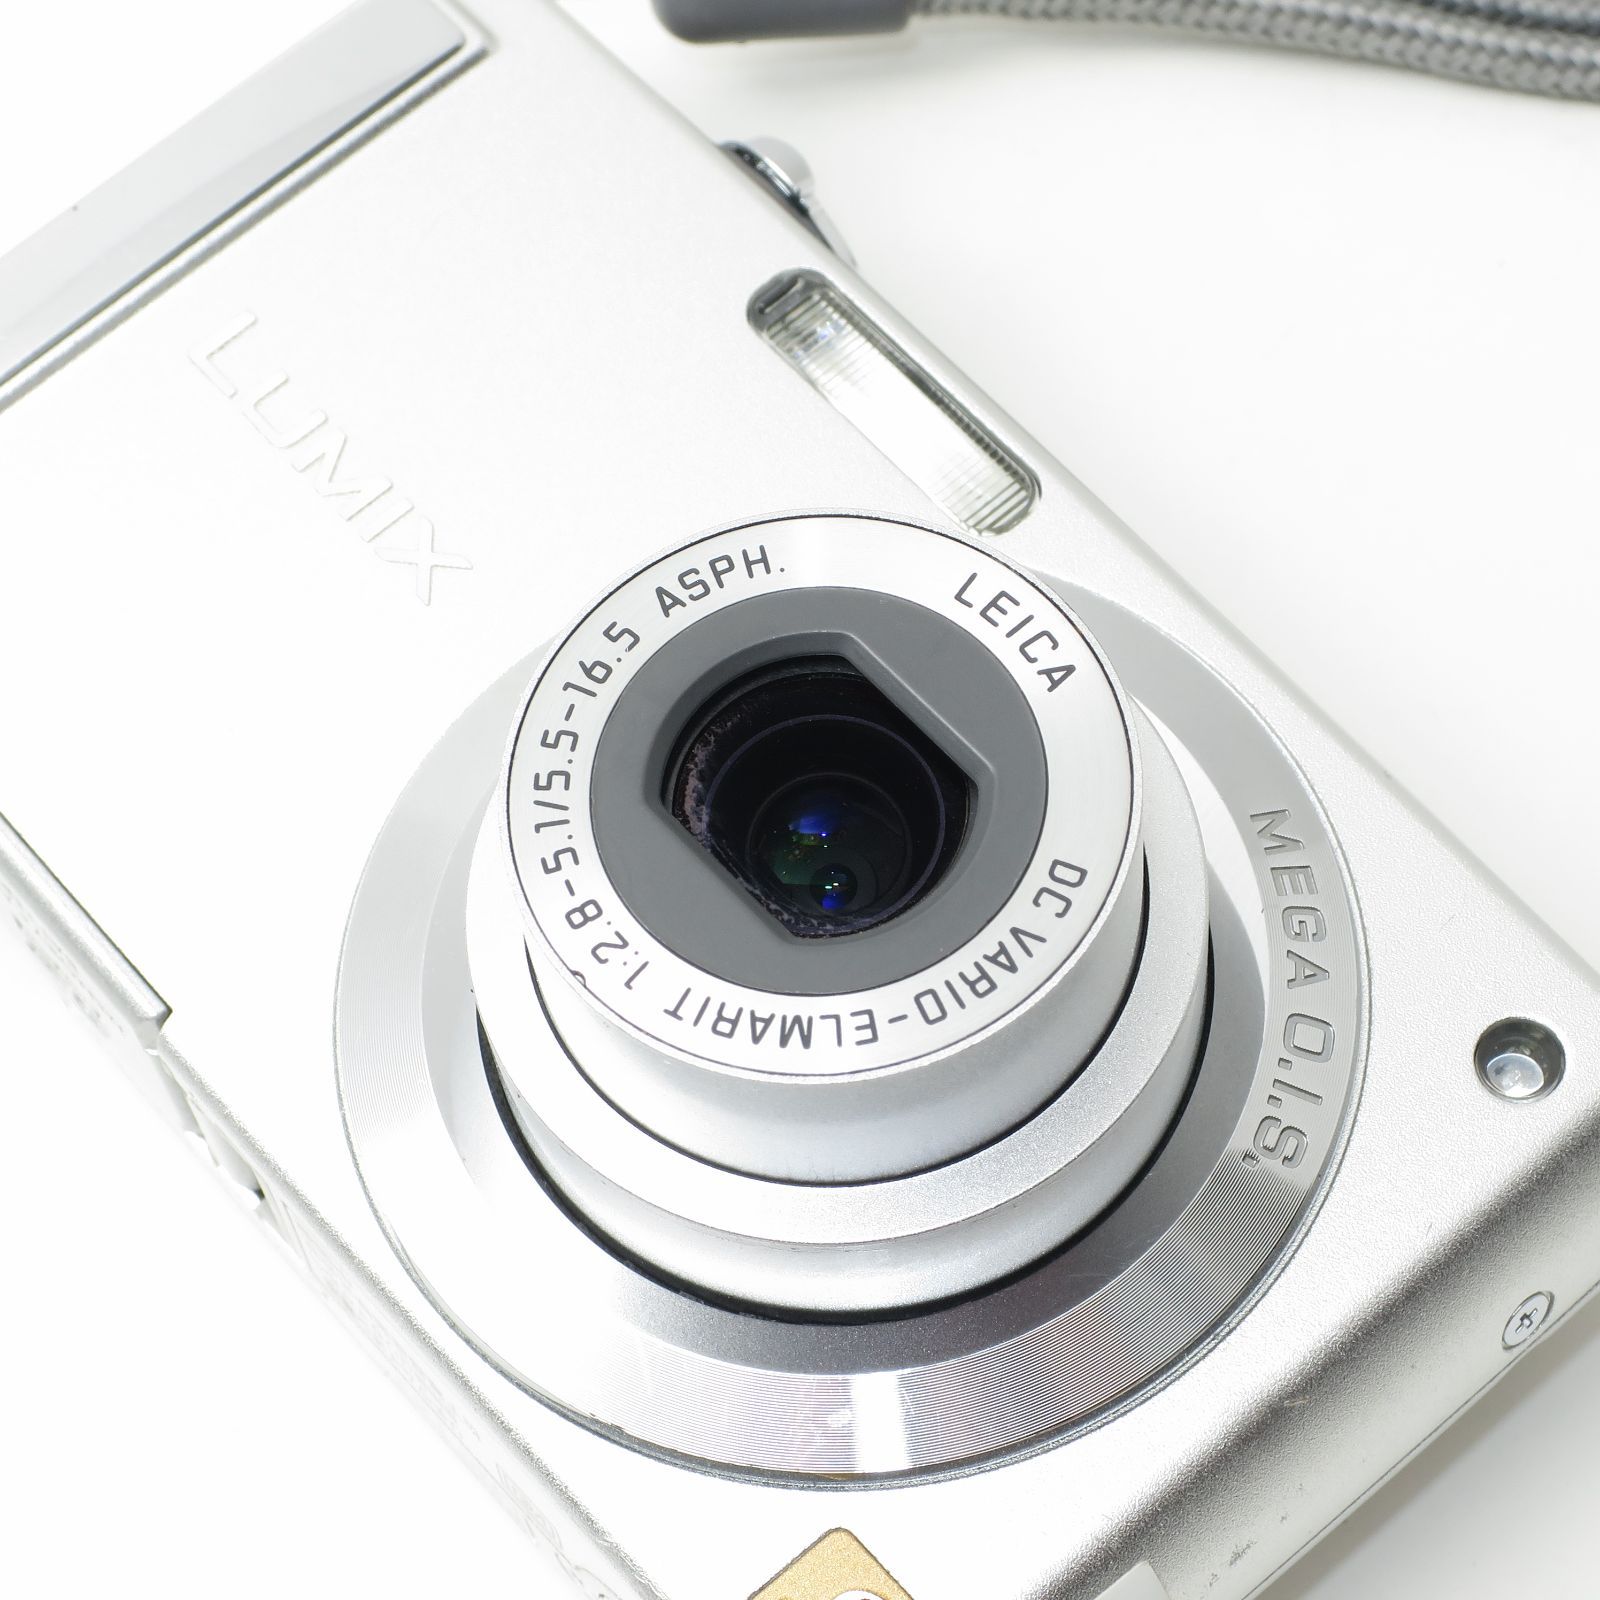 Panasonic LUMIX DMC-FS3 コンパクトデジタルカメラ 中古 オールド 